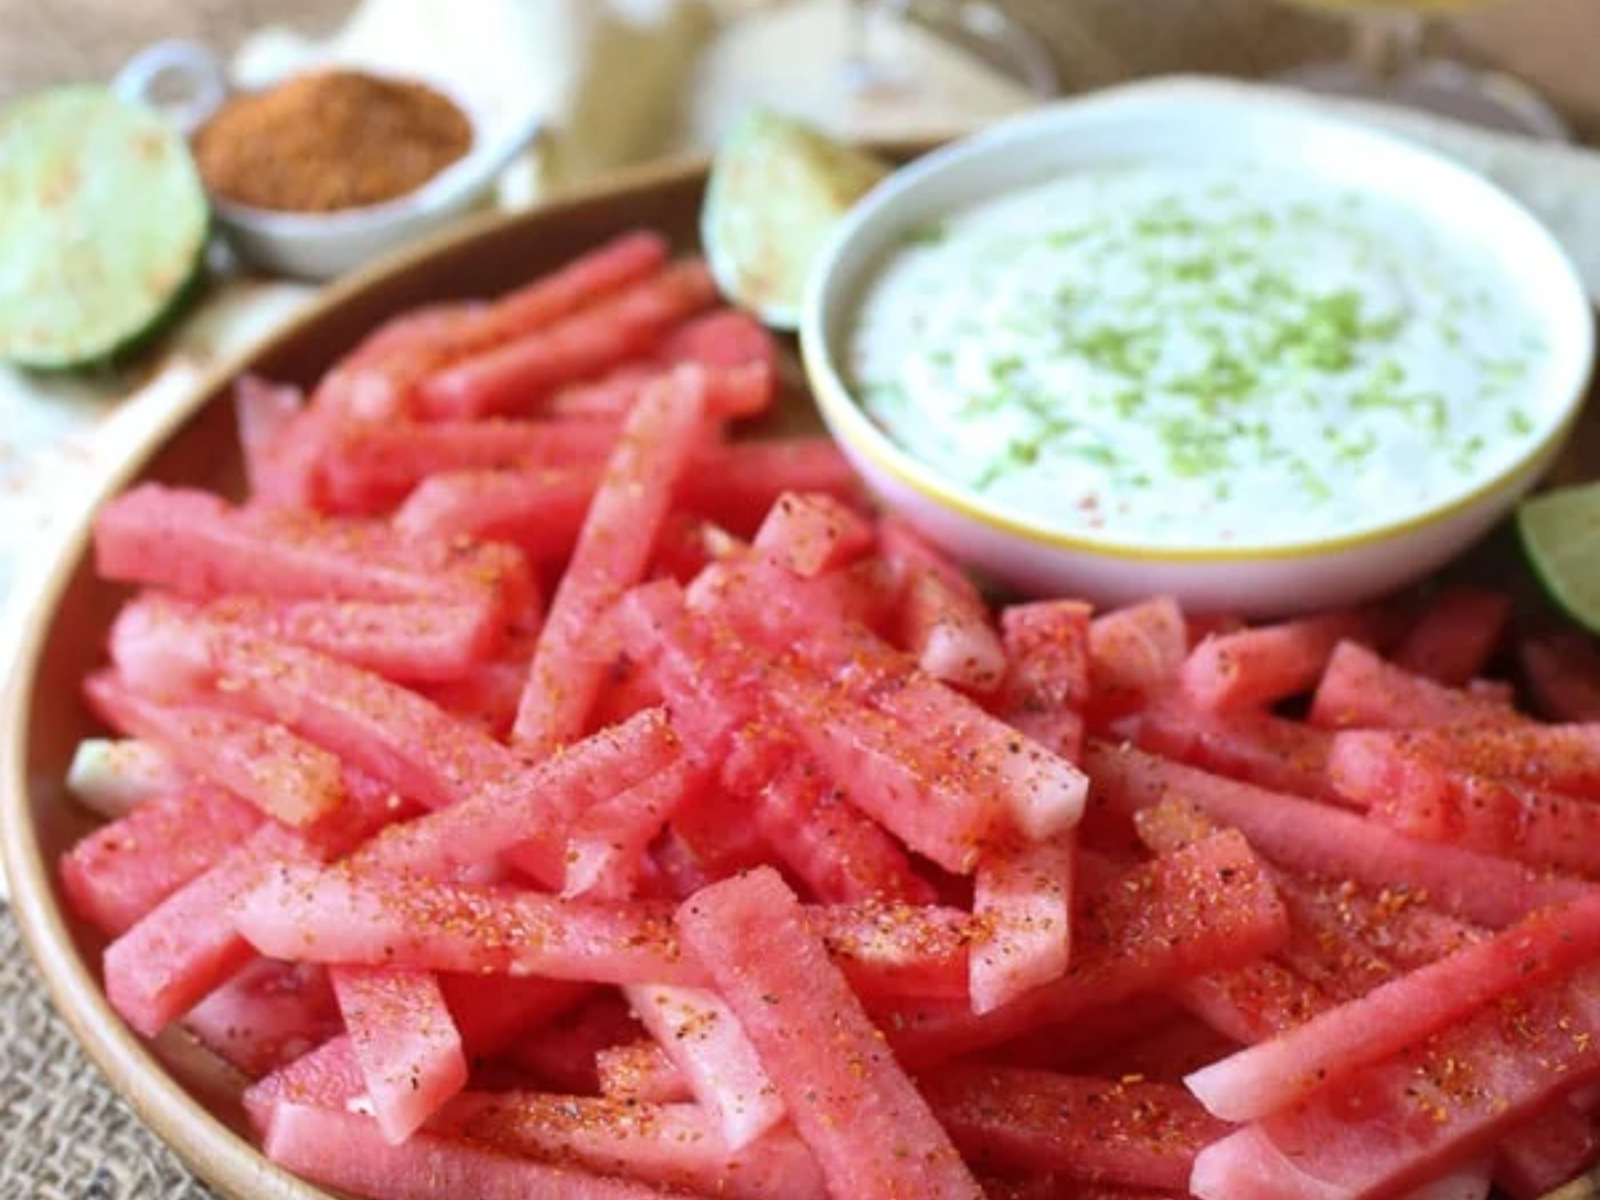 Watermelon Fries